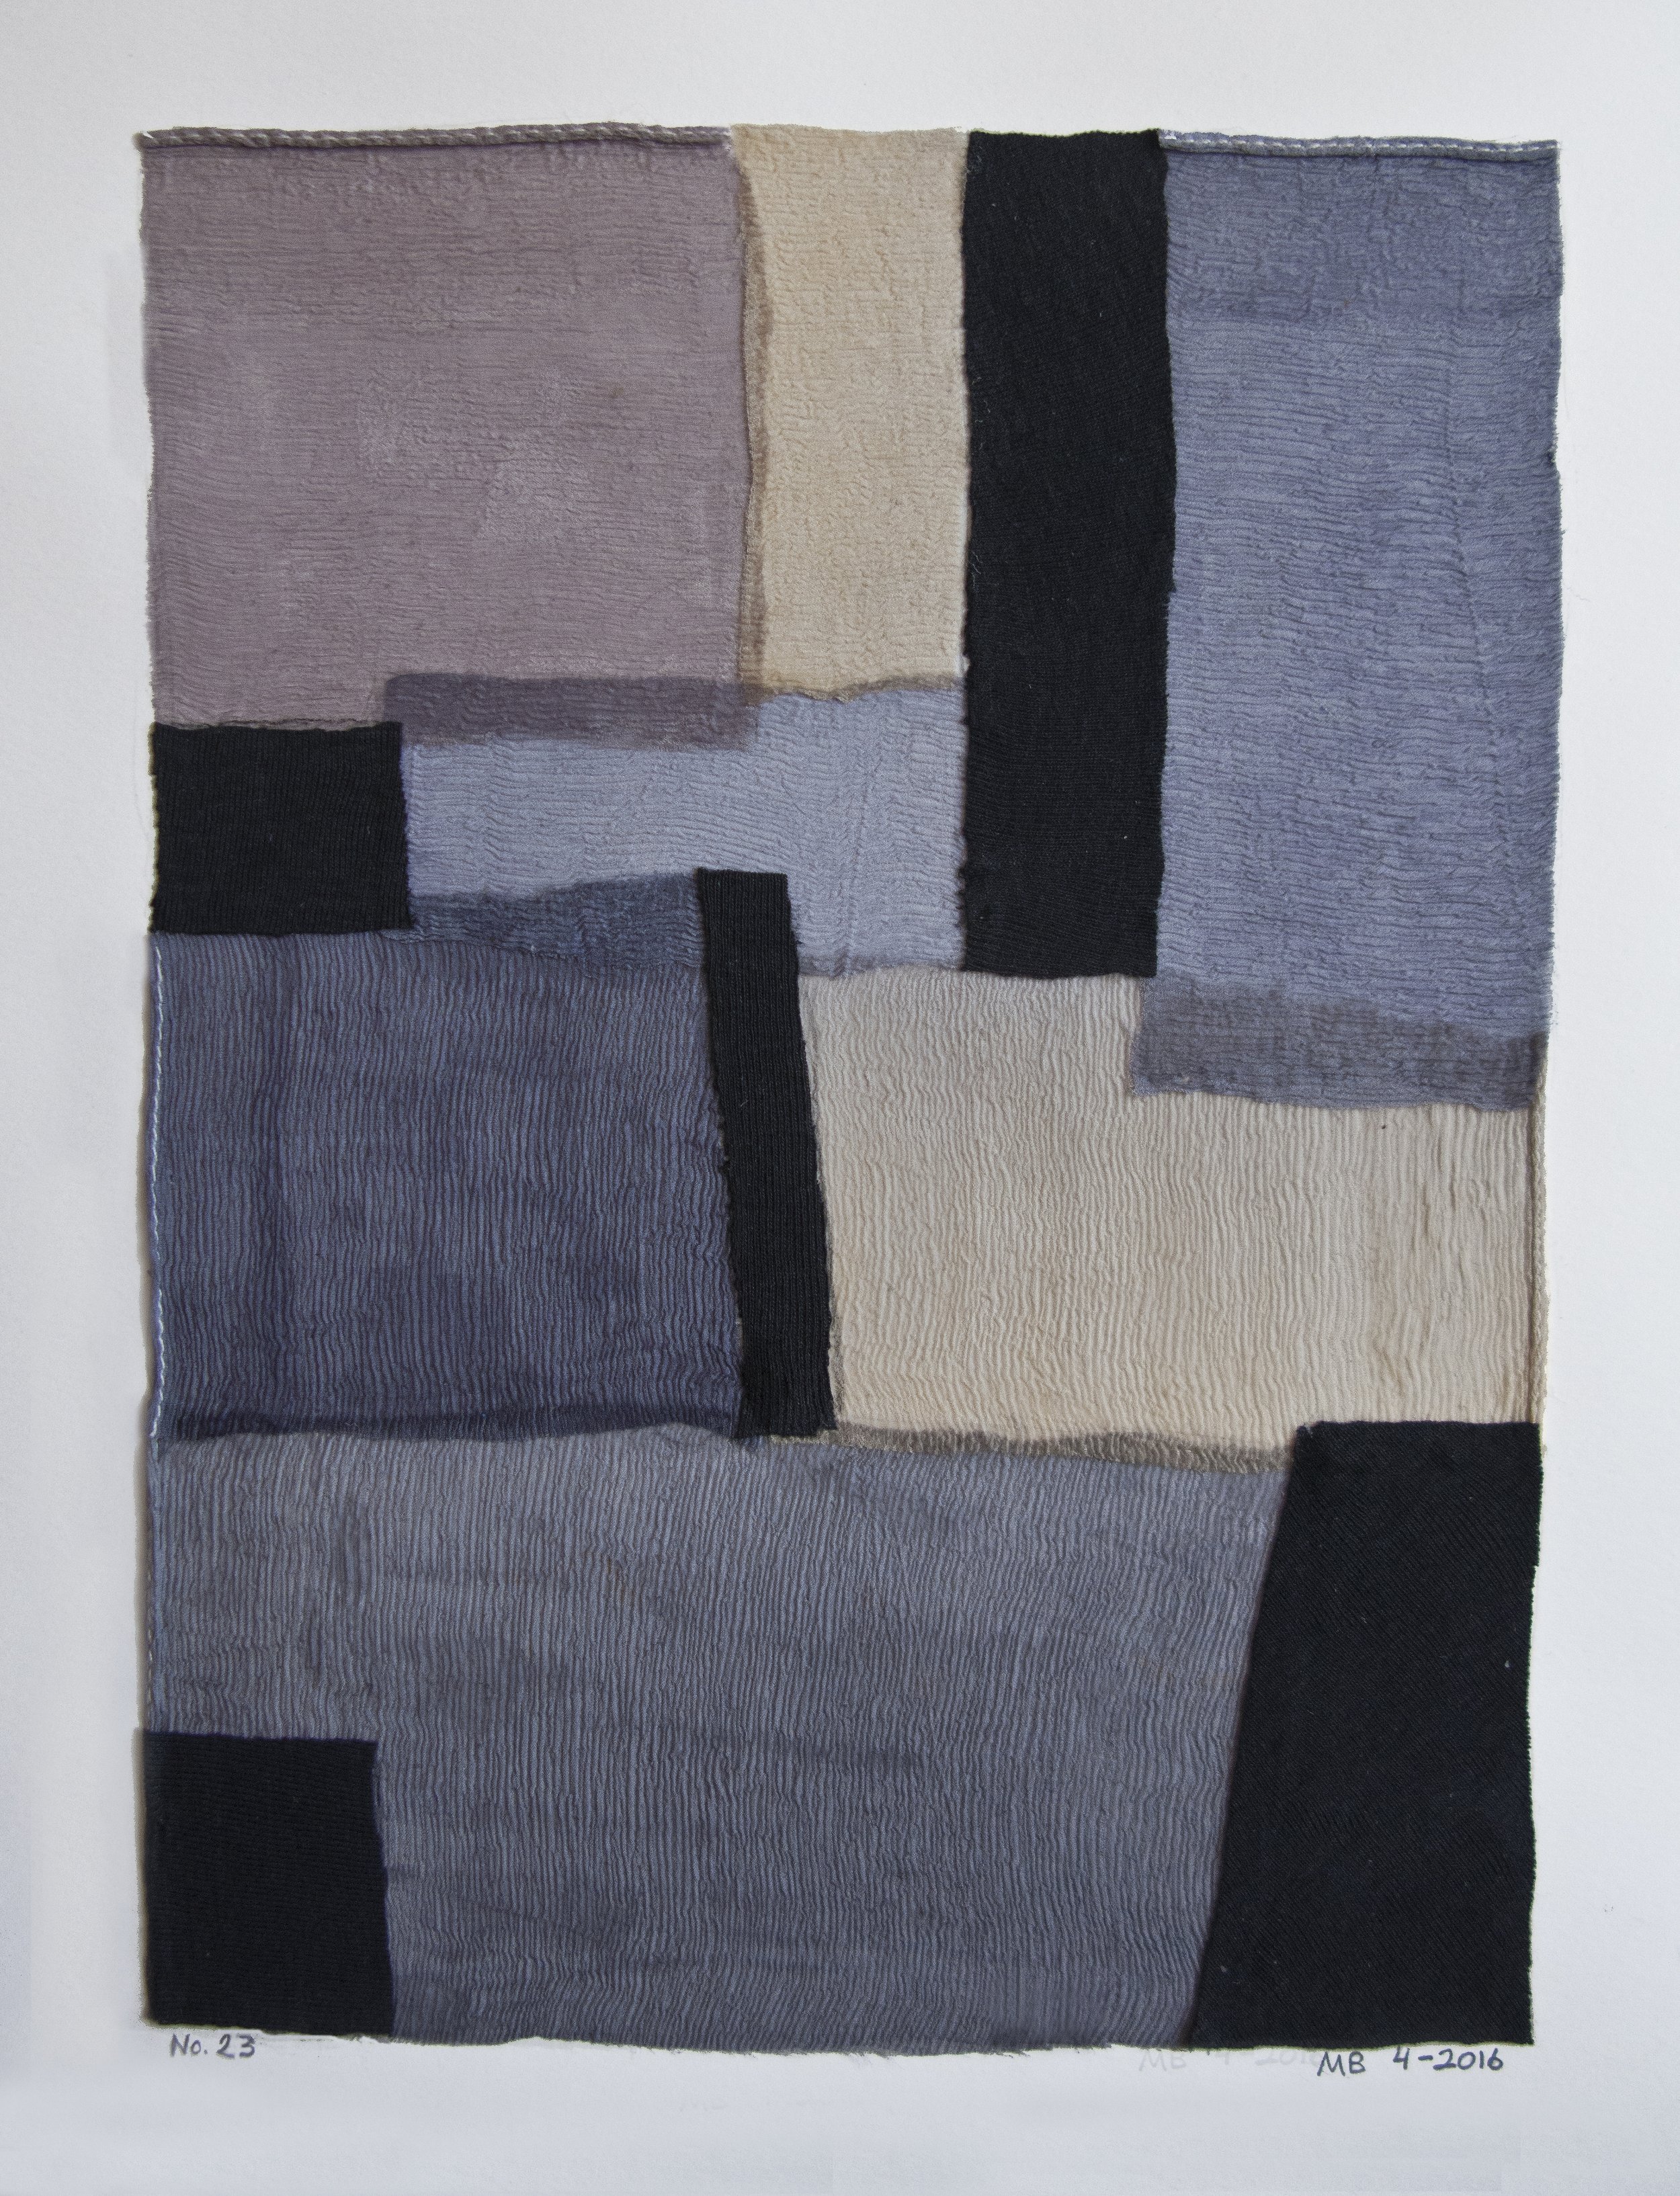    Collage #23,   silk chiffon, cotton on 14 x 11 in. acid free paper, 2016  